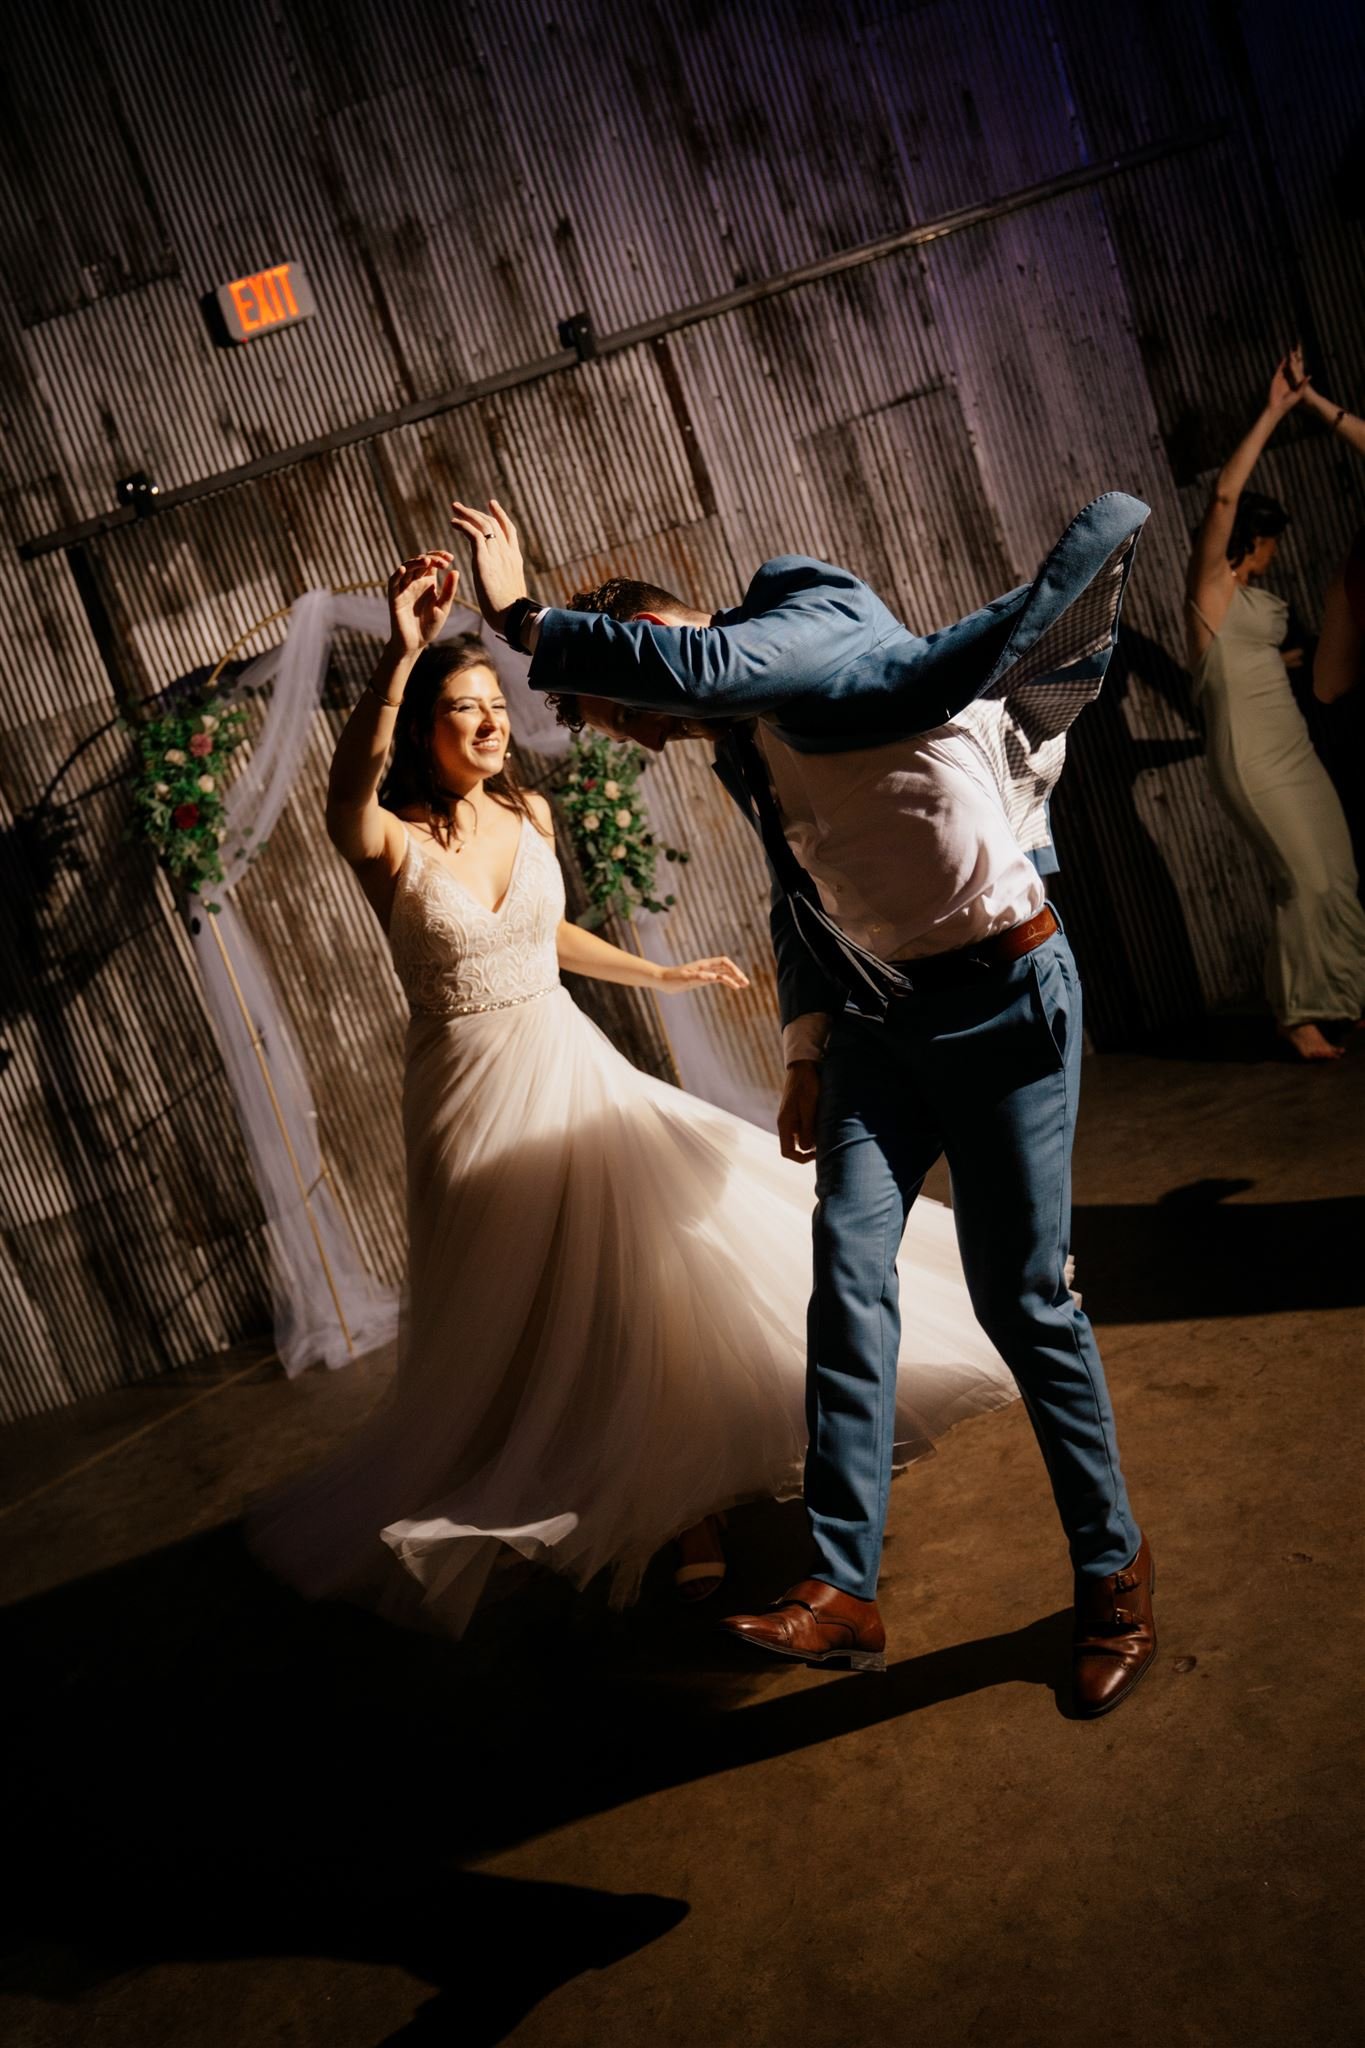 Wedding Dancing portrait.jpg